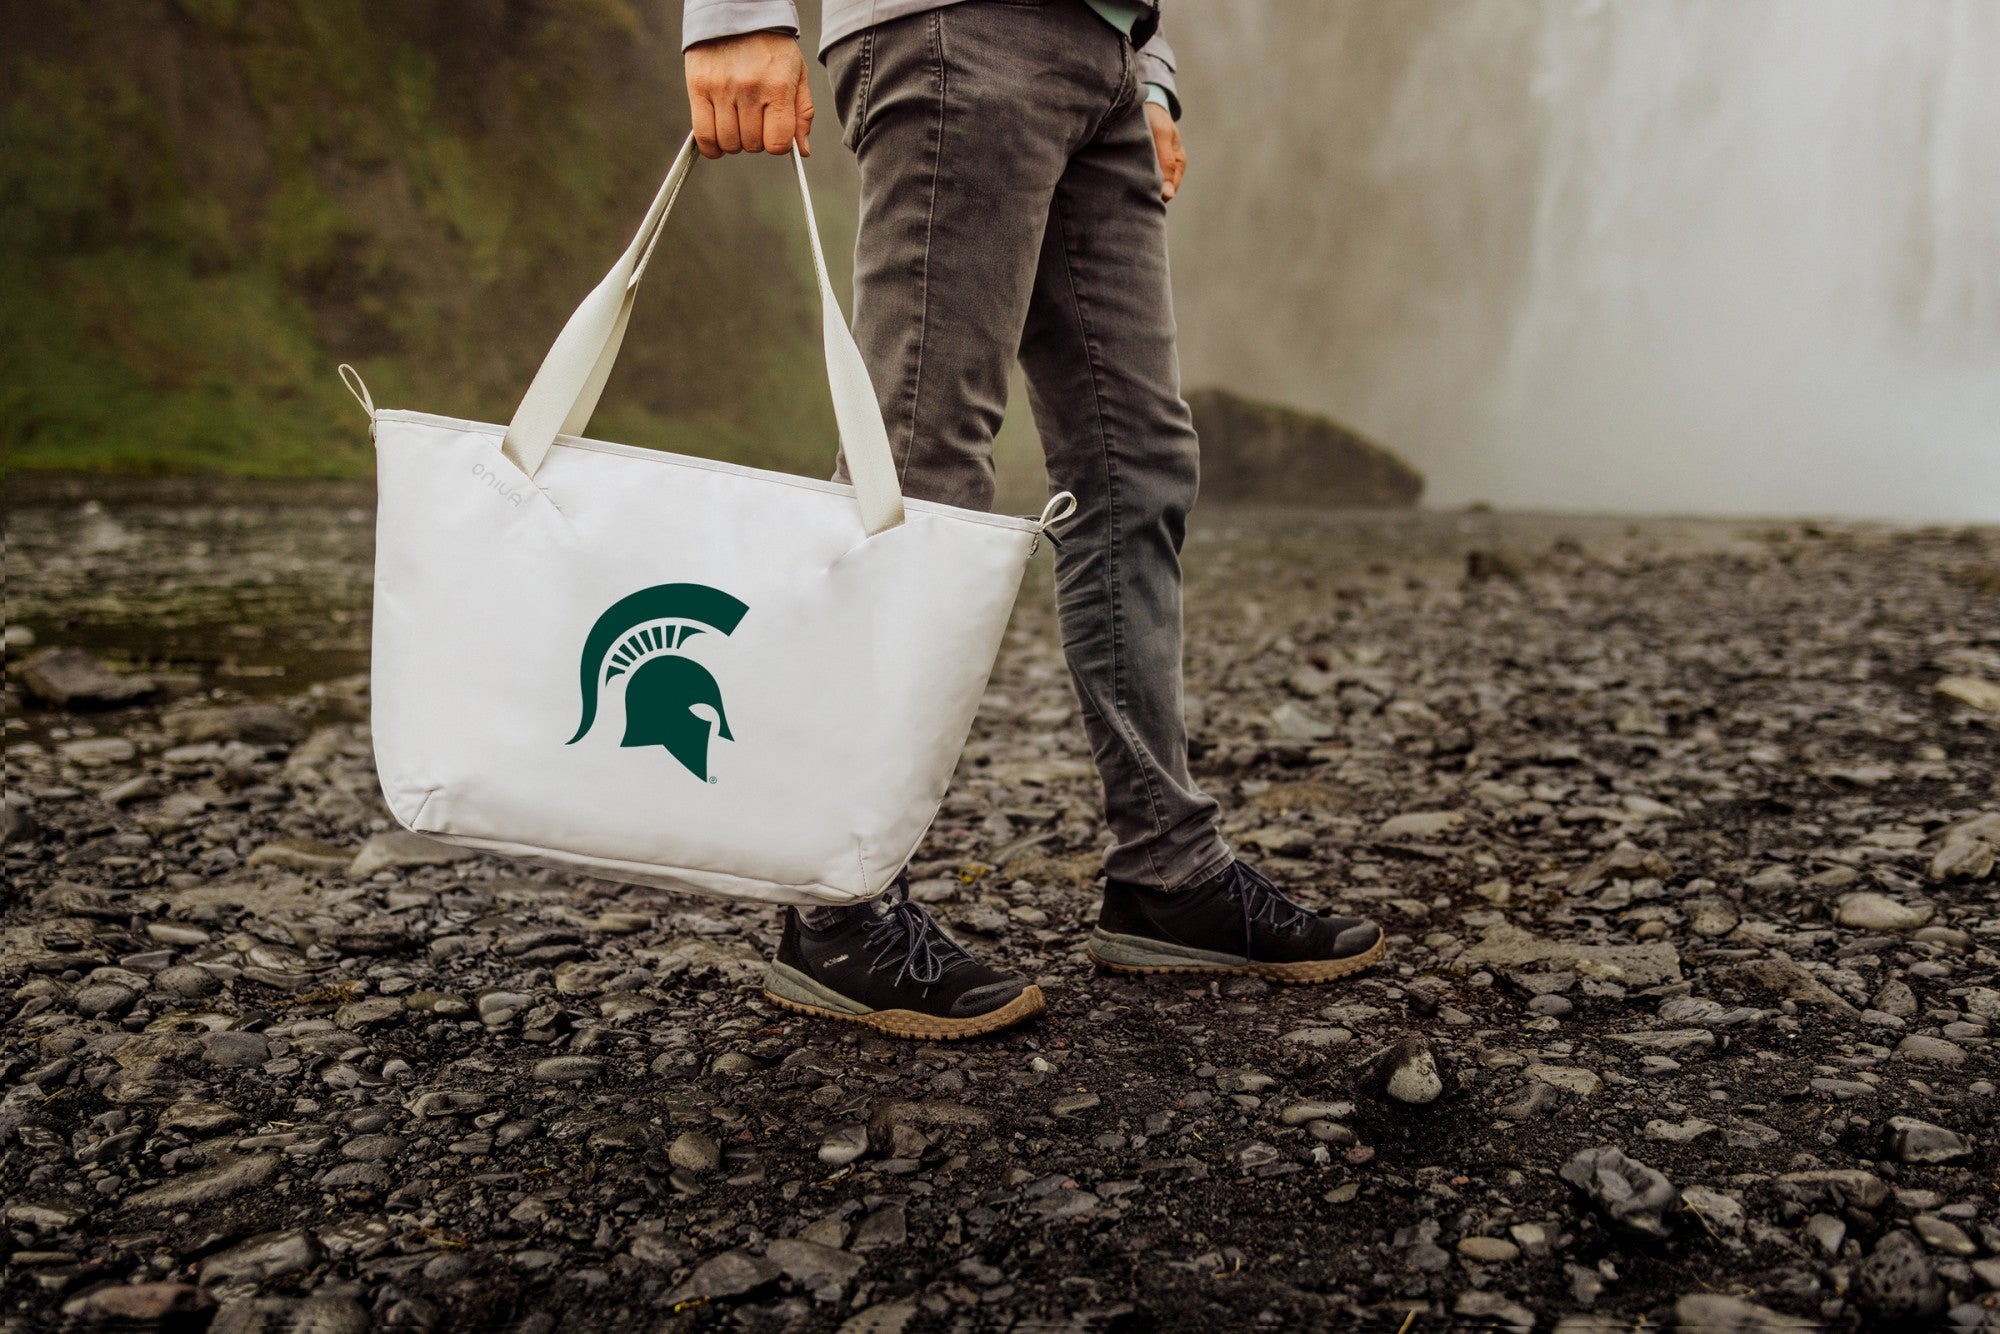 Michigan State Spartans - Tarana Cooler Tote Bag